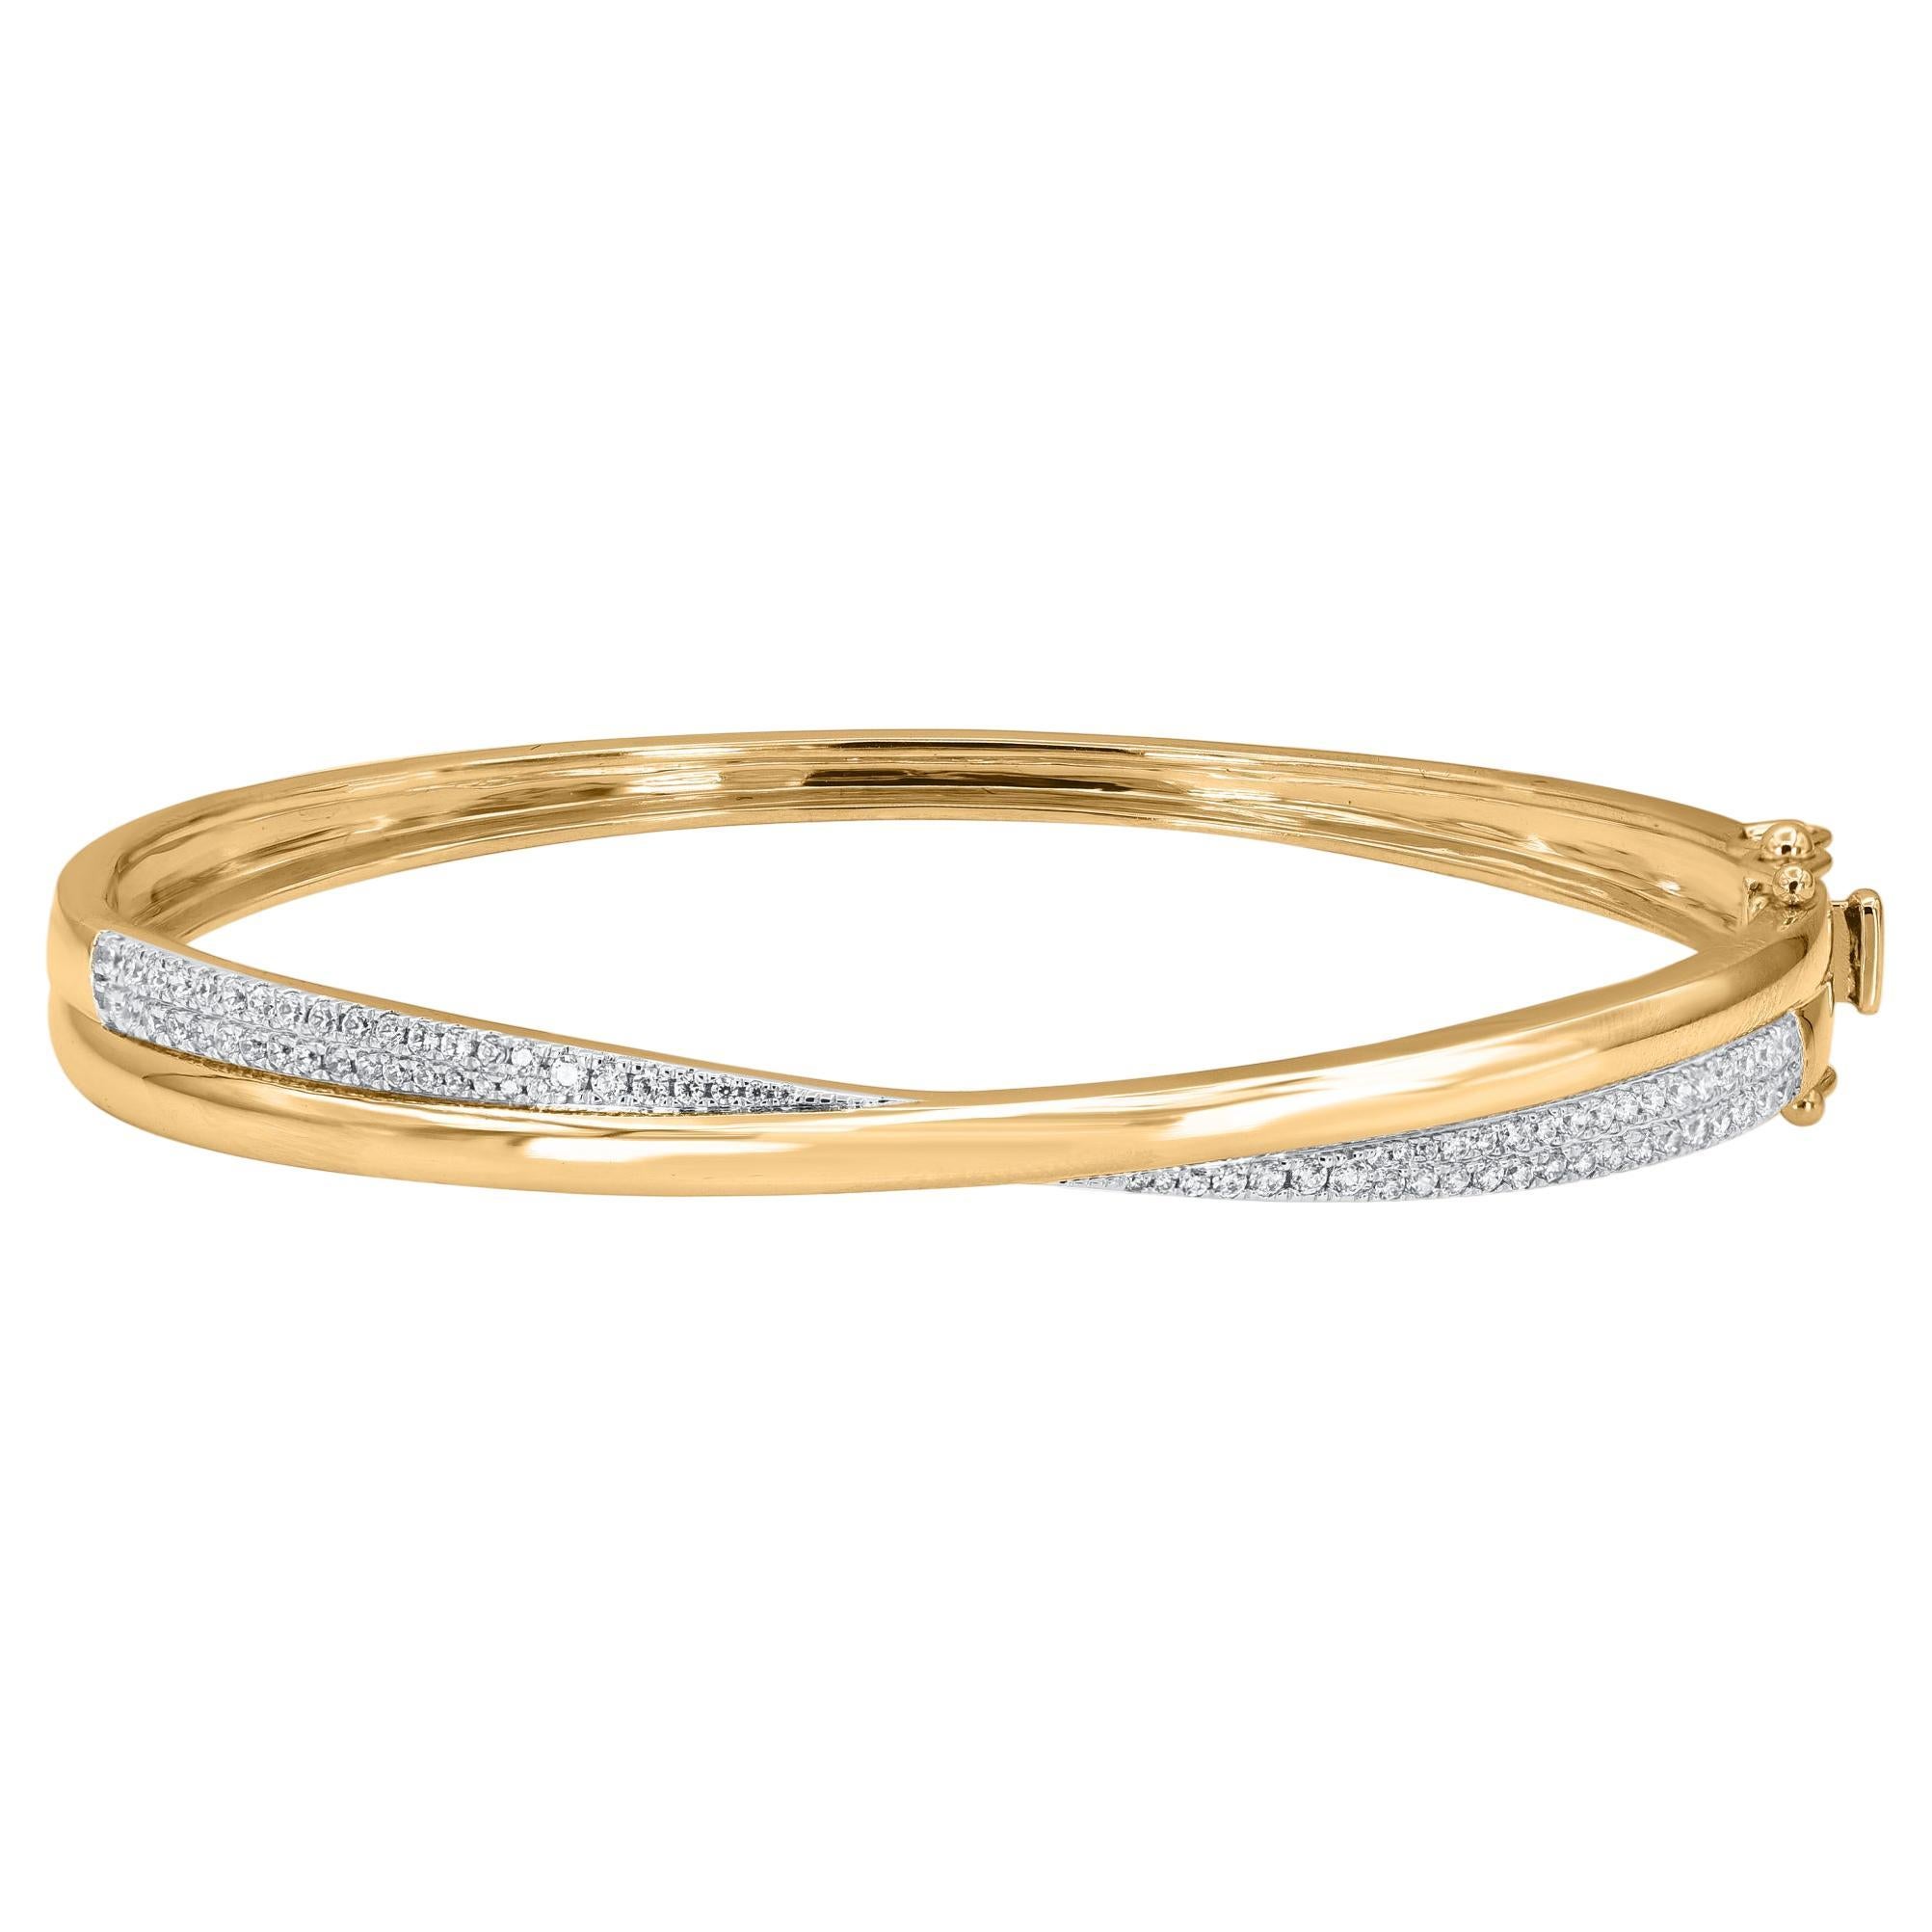 TJD 1/2 Carat Round Cut Diamond Criss Cross Bangle Bracelet in 14KT Yellow Gold